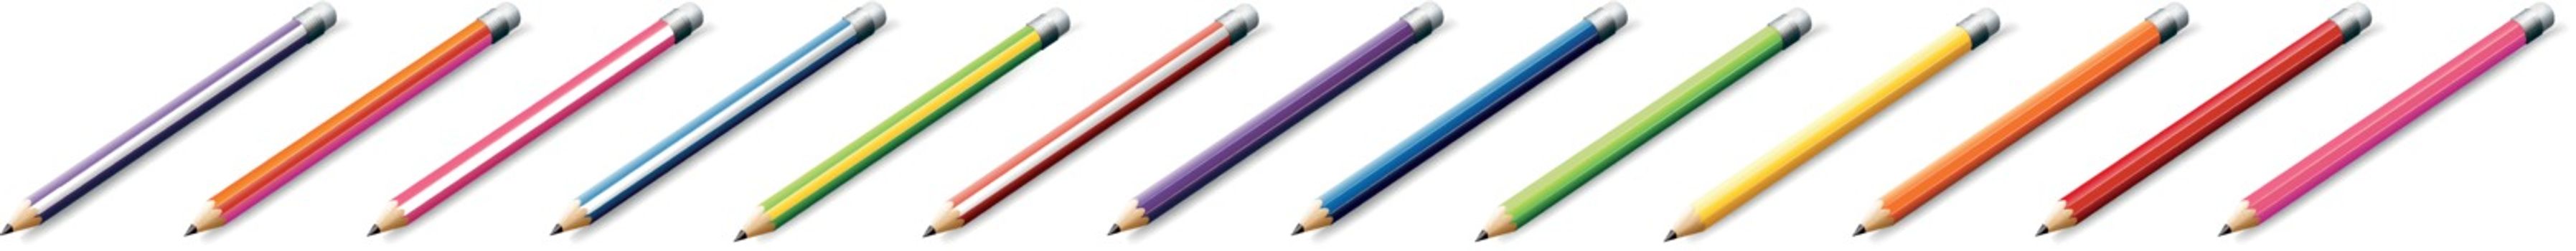 Thirteen colorful pencils